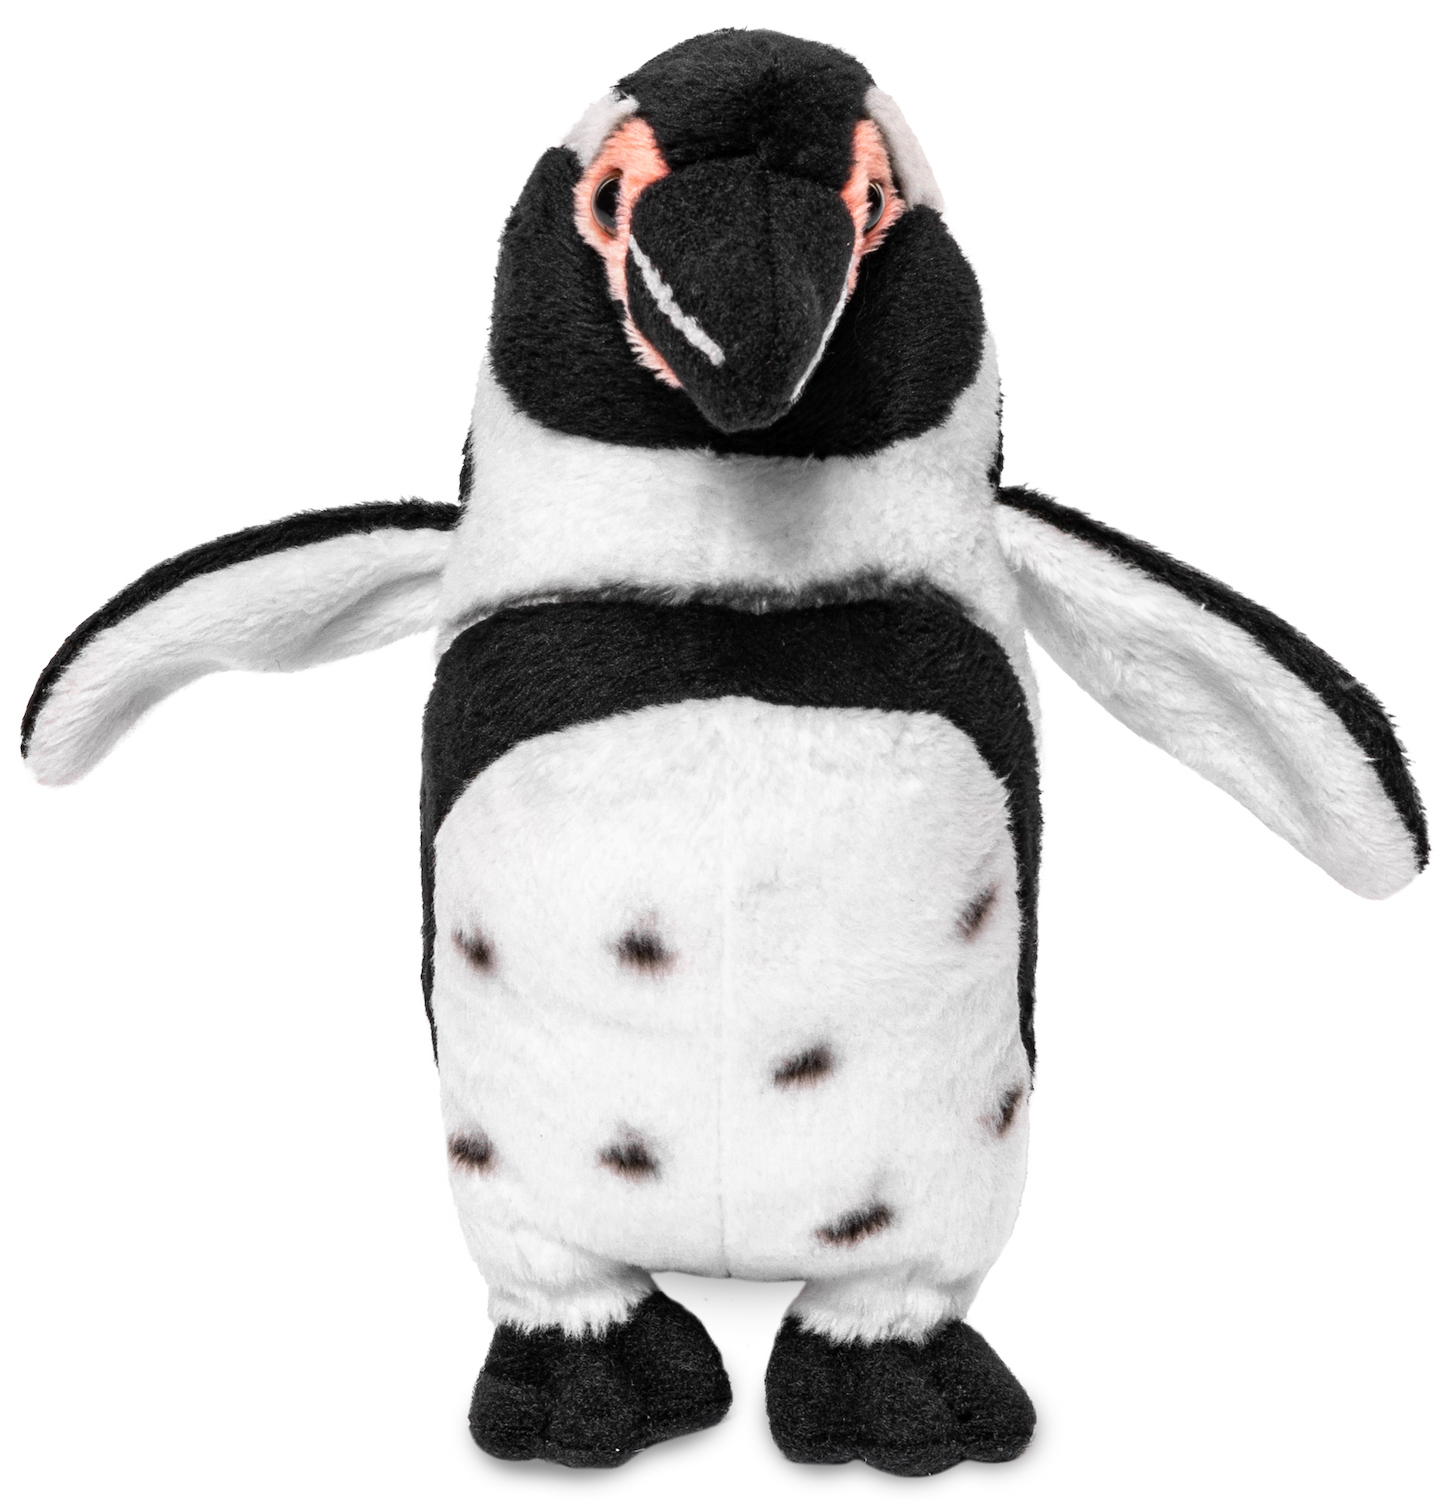 Humboldt Penguin - 19 cm (height) - Plush Bird, Penguin - Plush Toy, Cuddly Toy